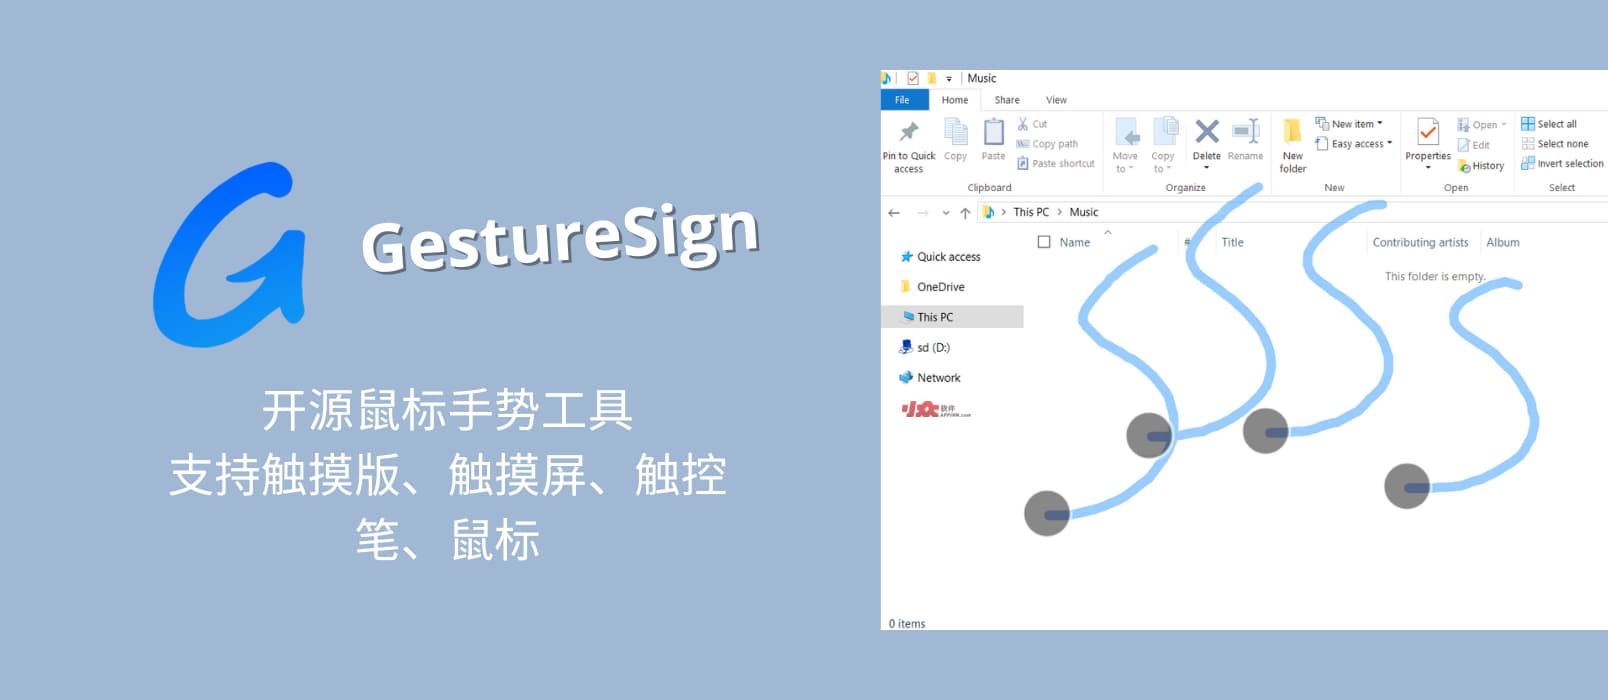 GestureSign - 开源鼠标手势工具，支持触摸版、触摸屏、触控笔、鼠标[Windows]